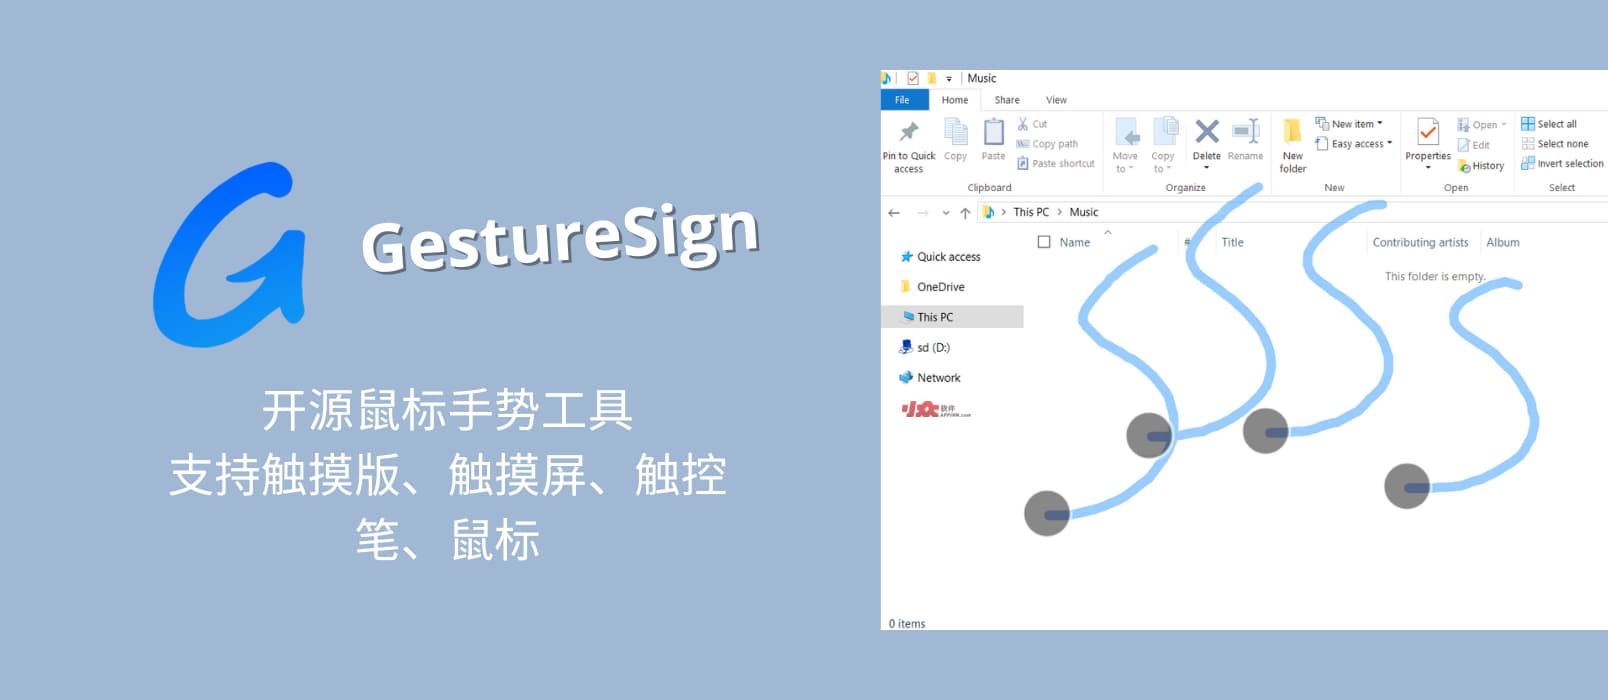 GestureSign - 开源鼠标手势工具，支持触摸版、触摸屏、触控笔、鼠标[Windows]